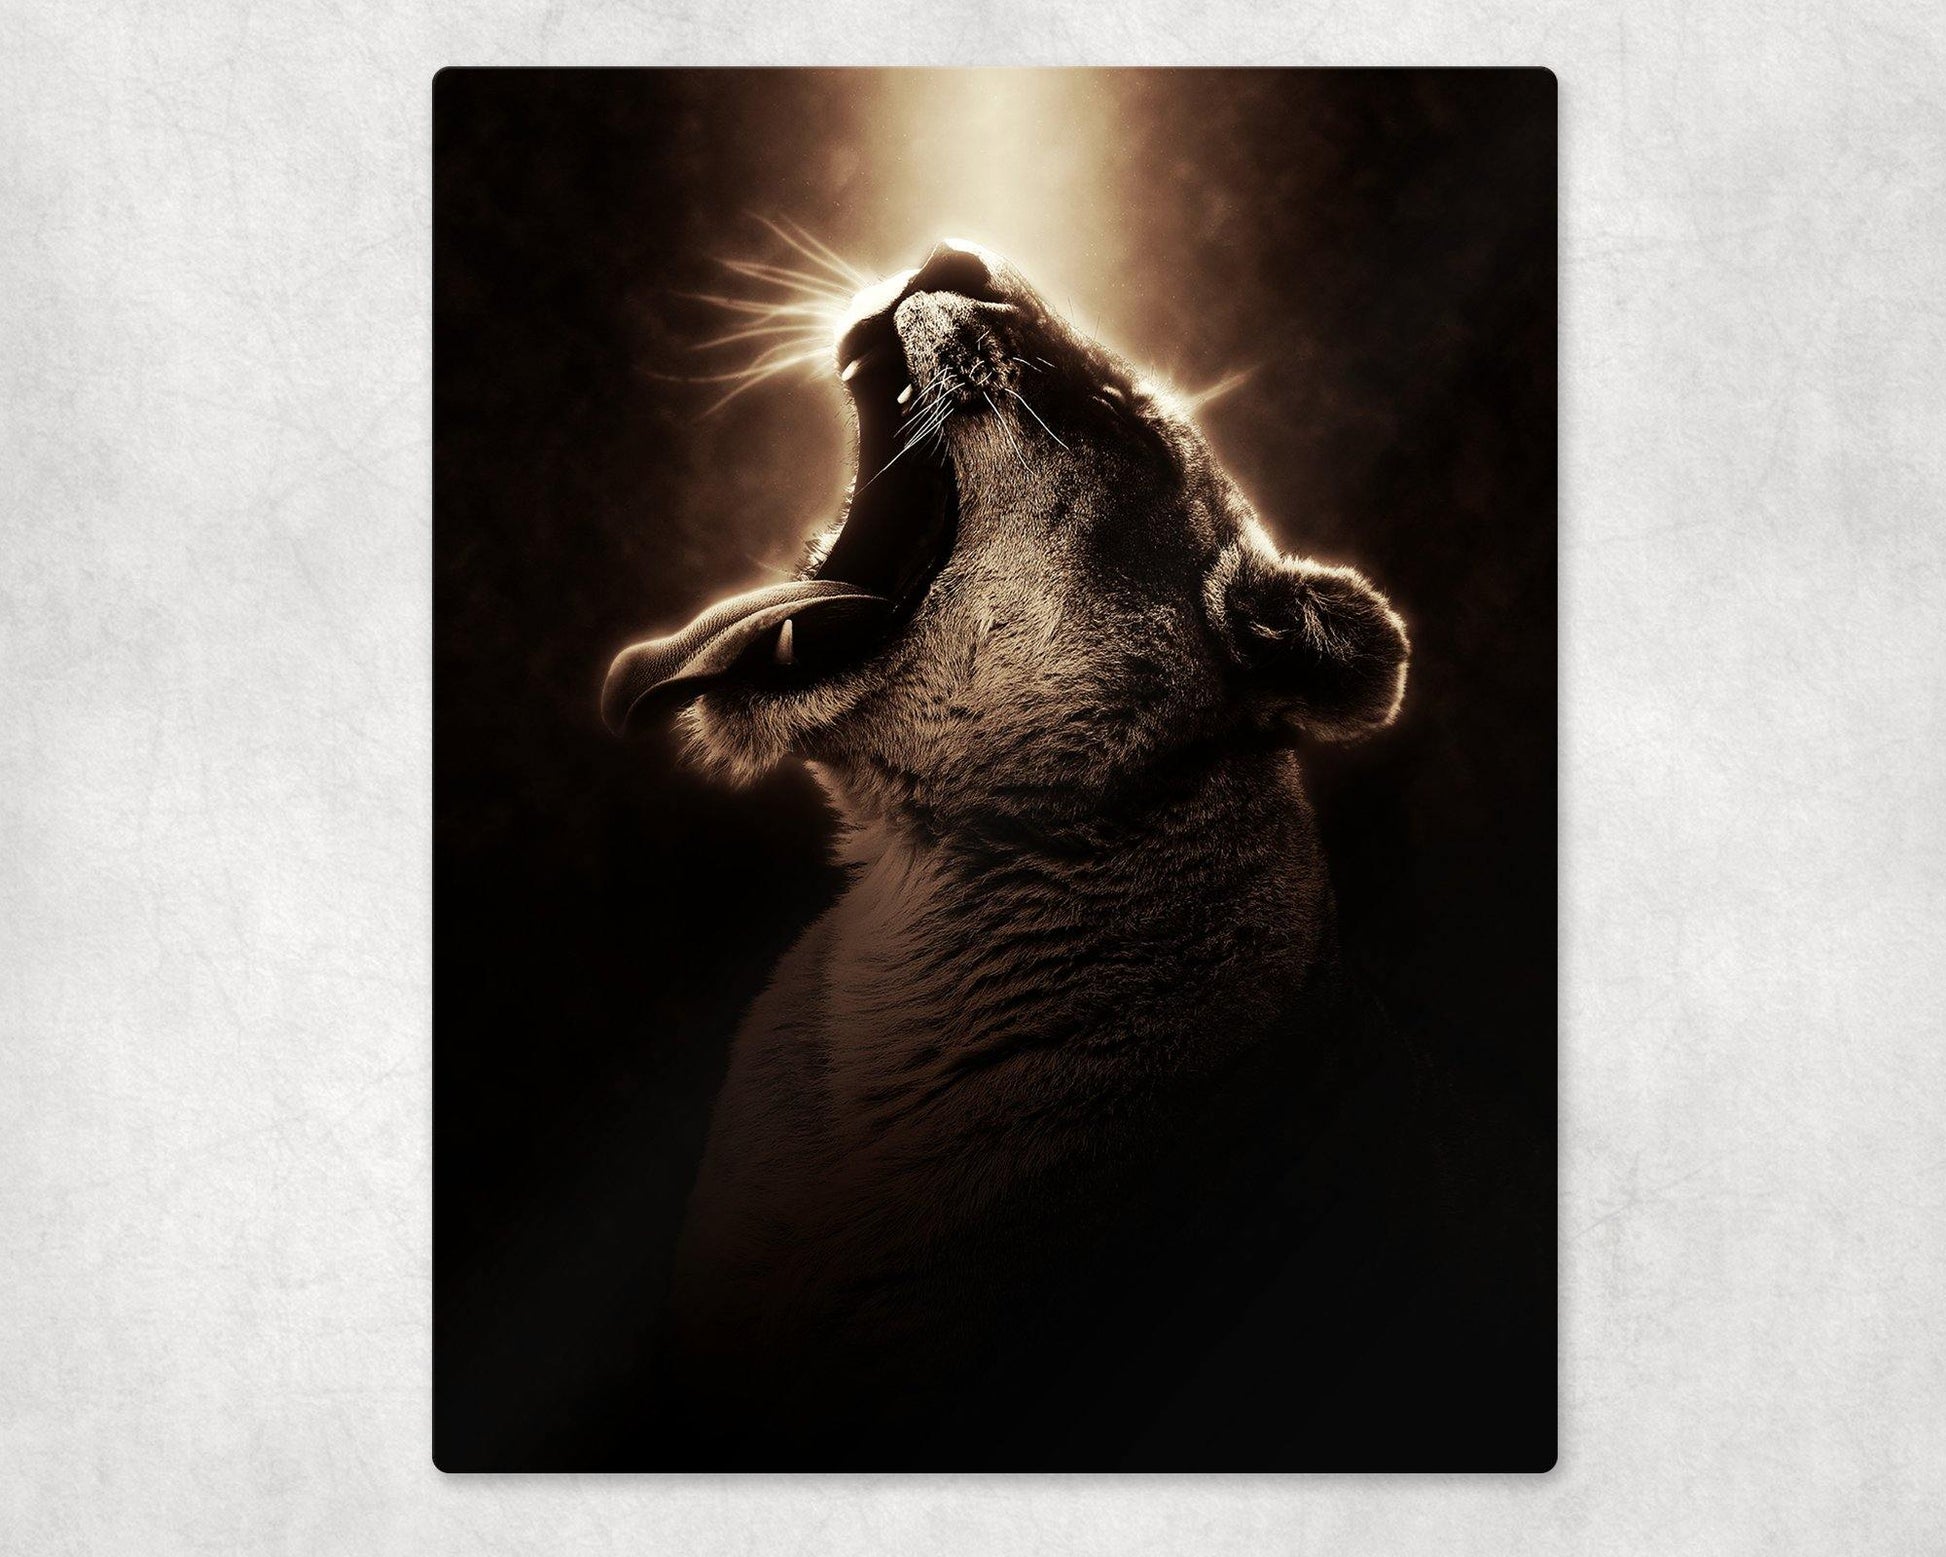 Roaring Lioness Metal Photo Panel - 8x10 - Schoppix Gifts